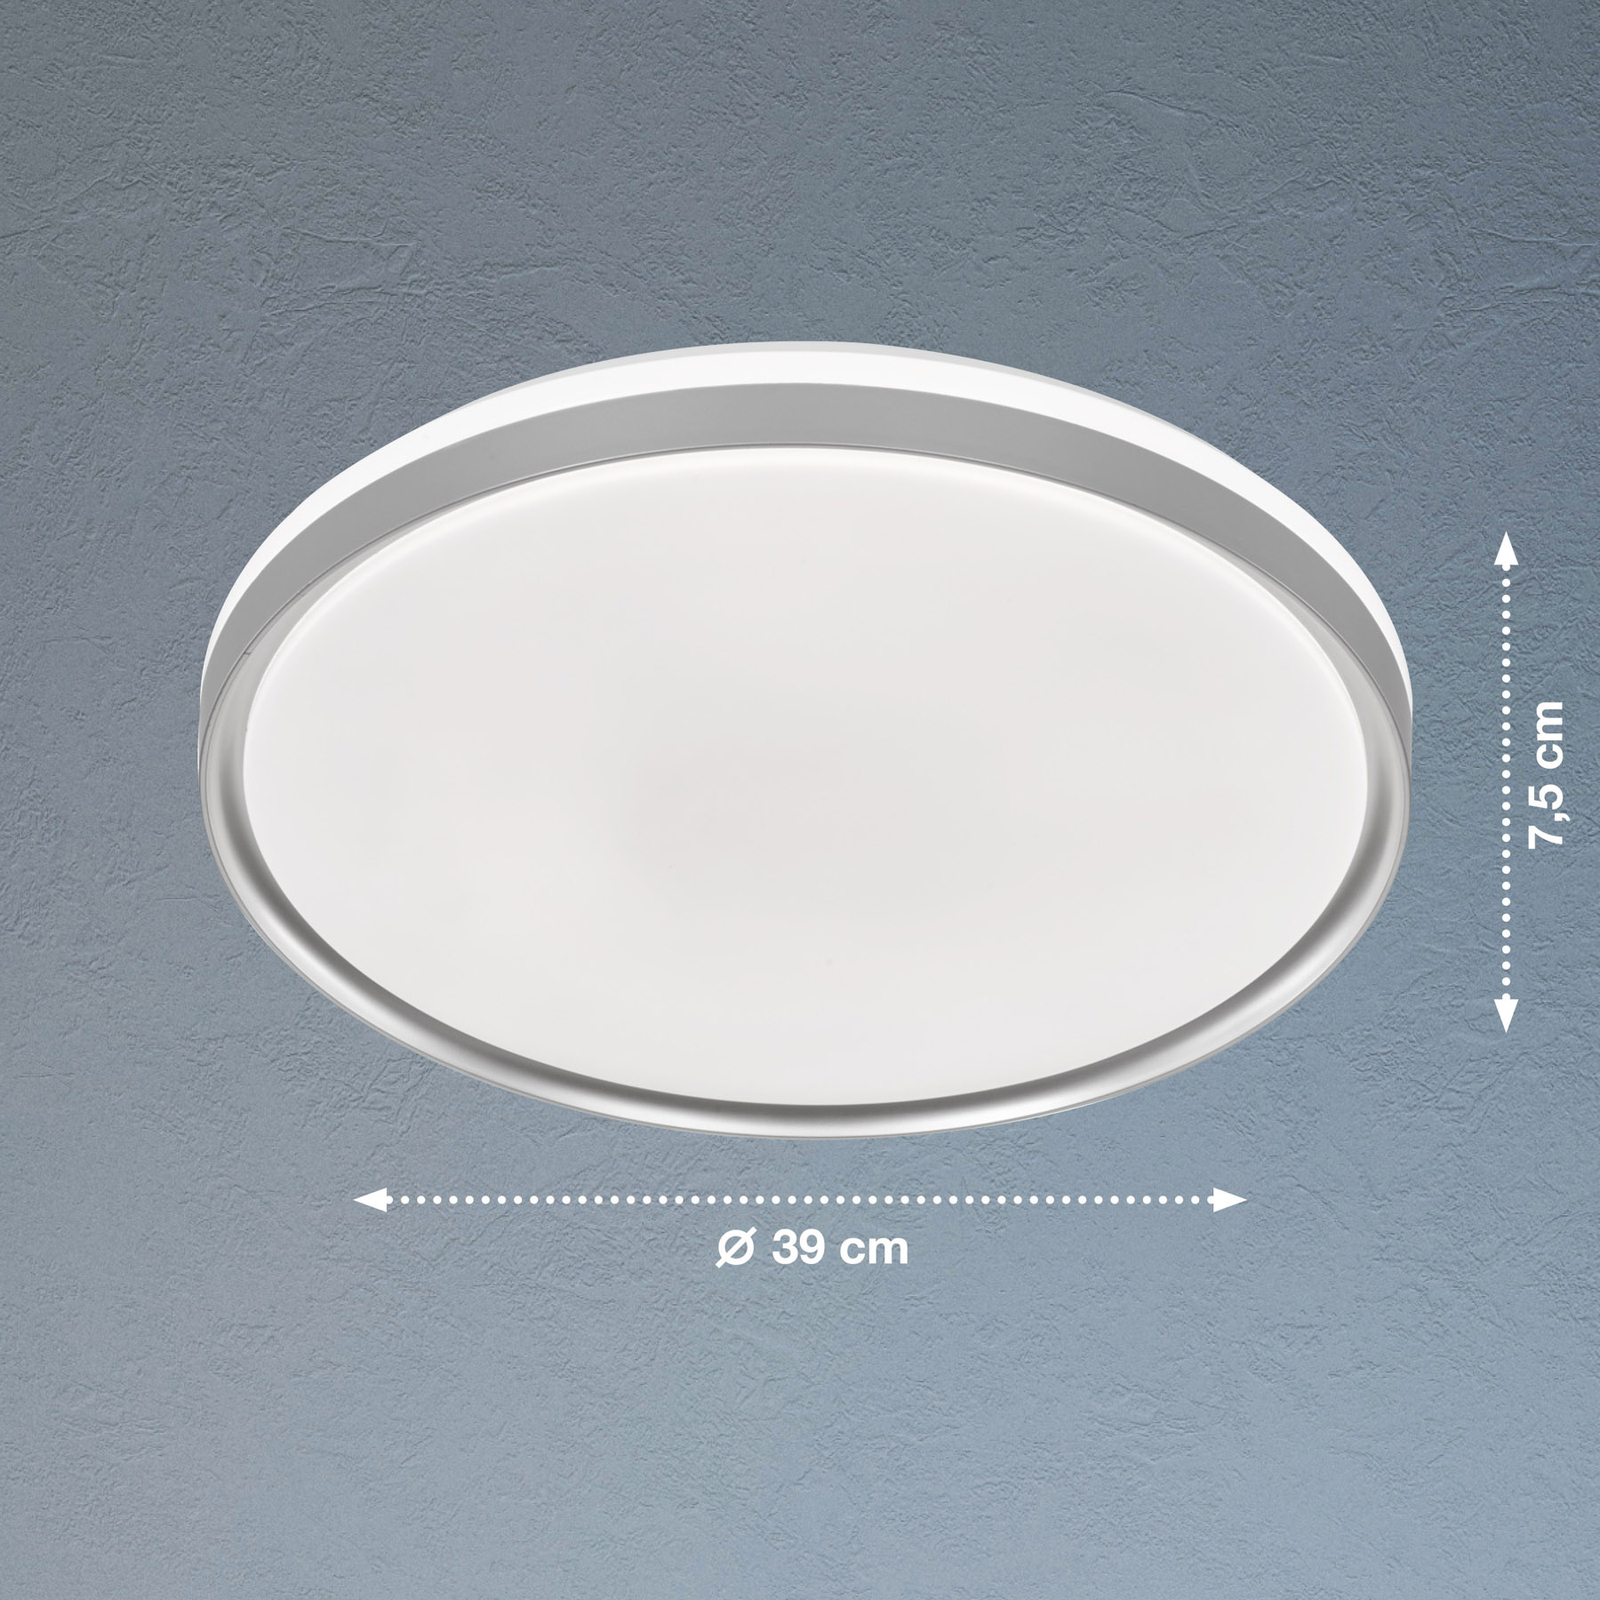 LED plafondlamp Jaso BS, Ø 39 cm, zilver